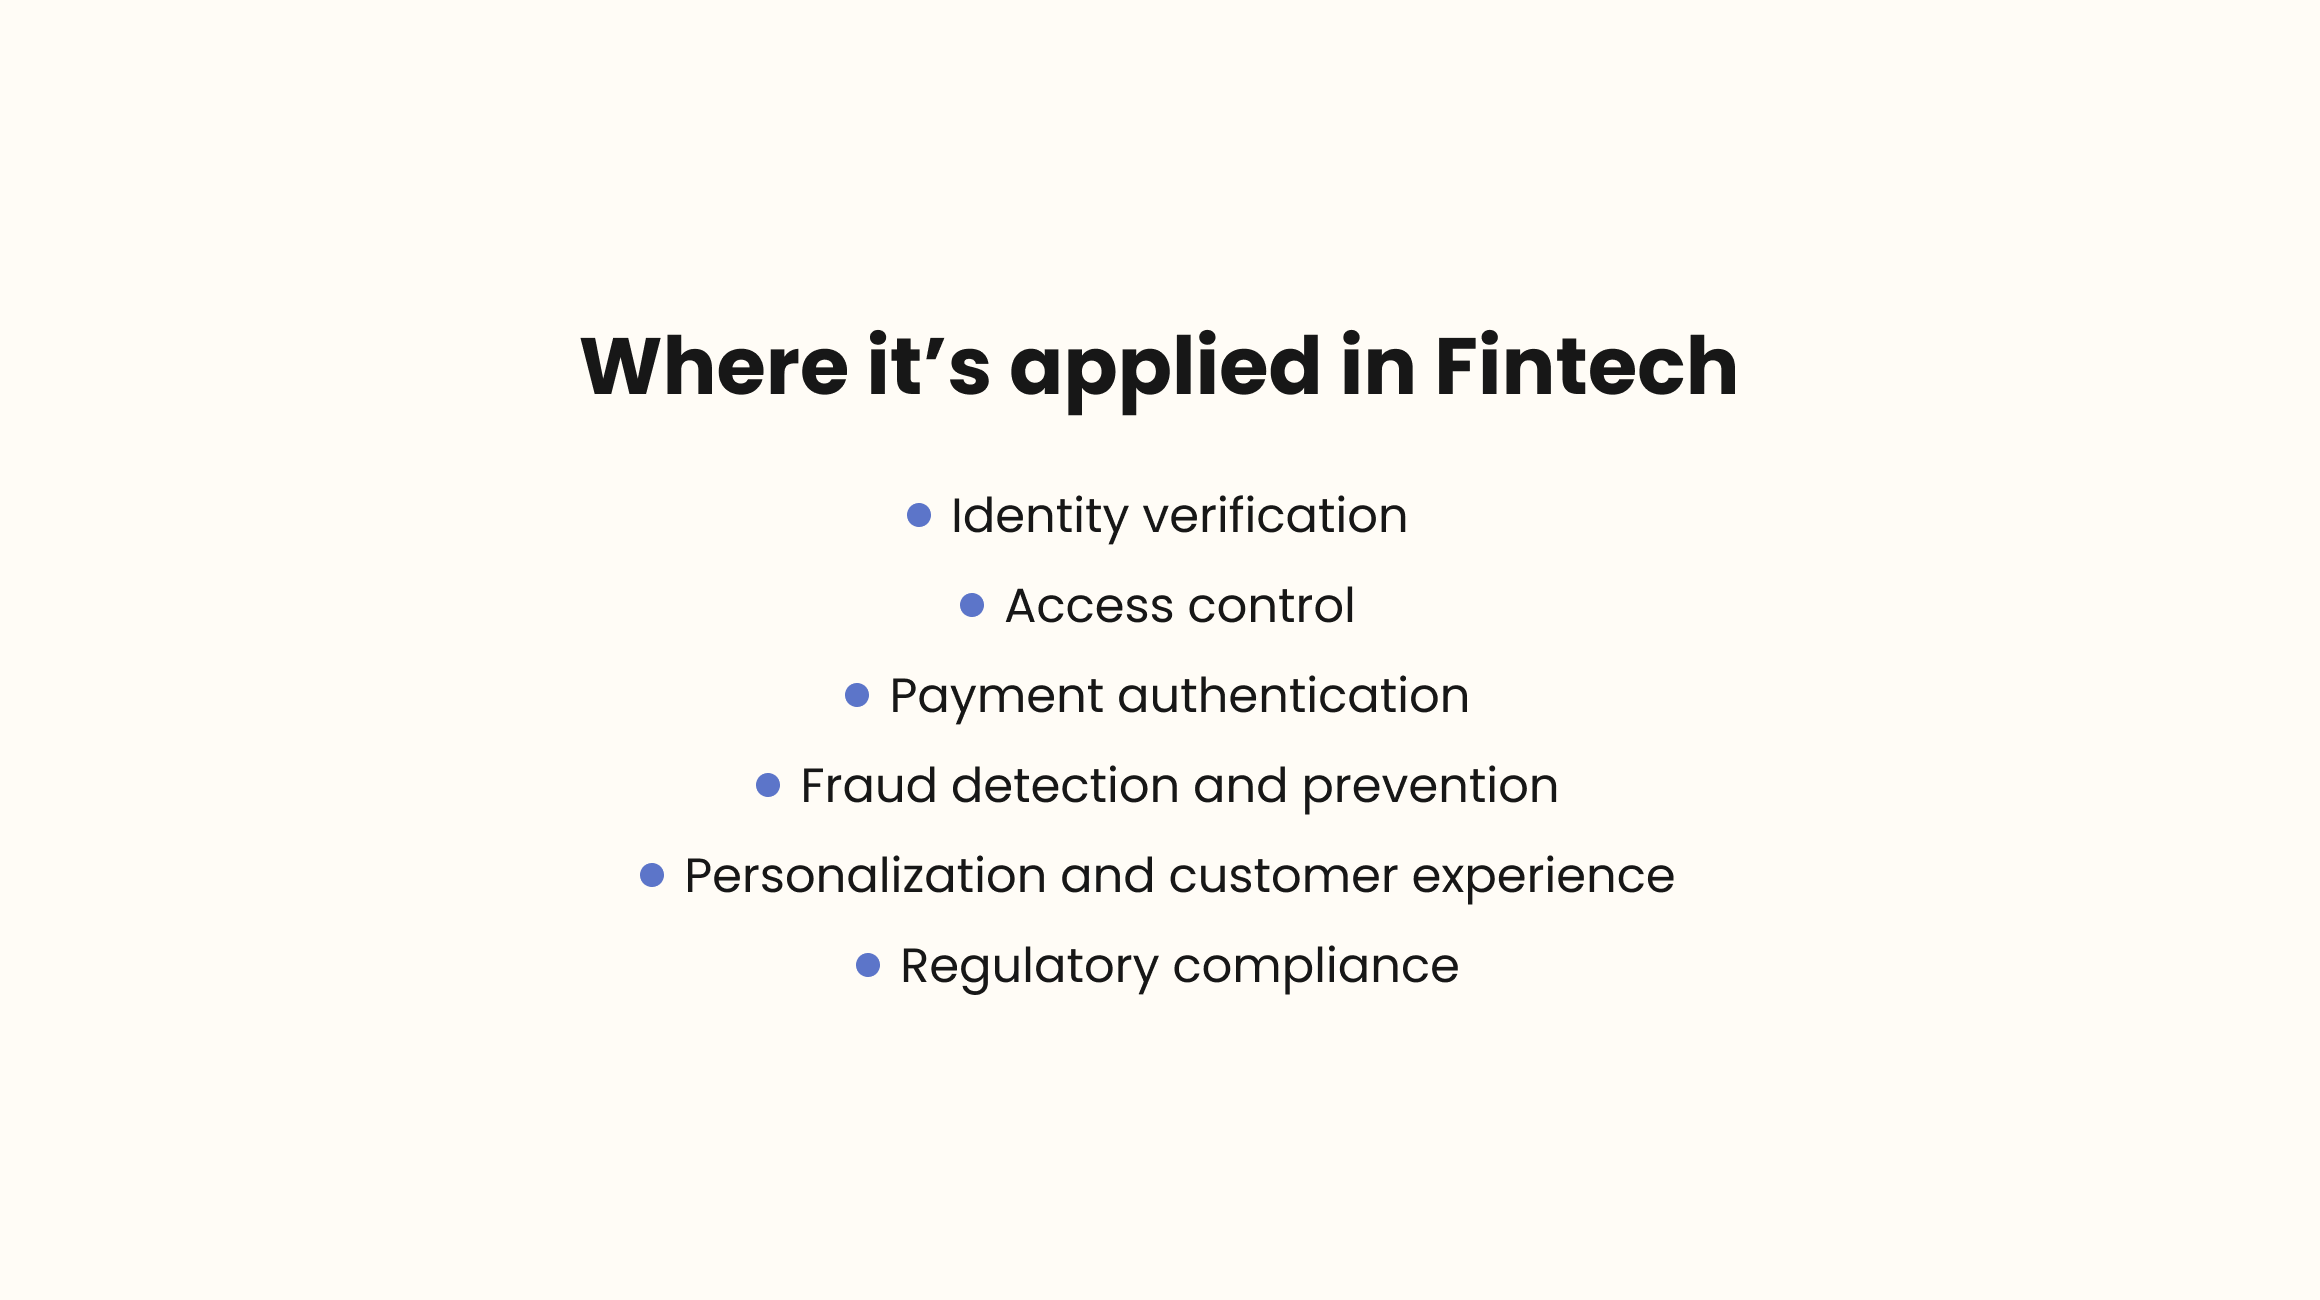 Applications of biometrics in Fintech